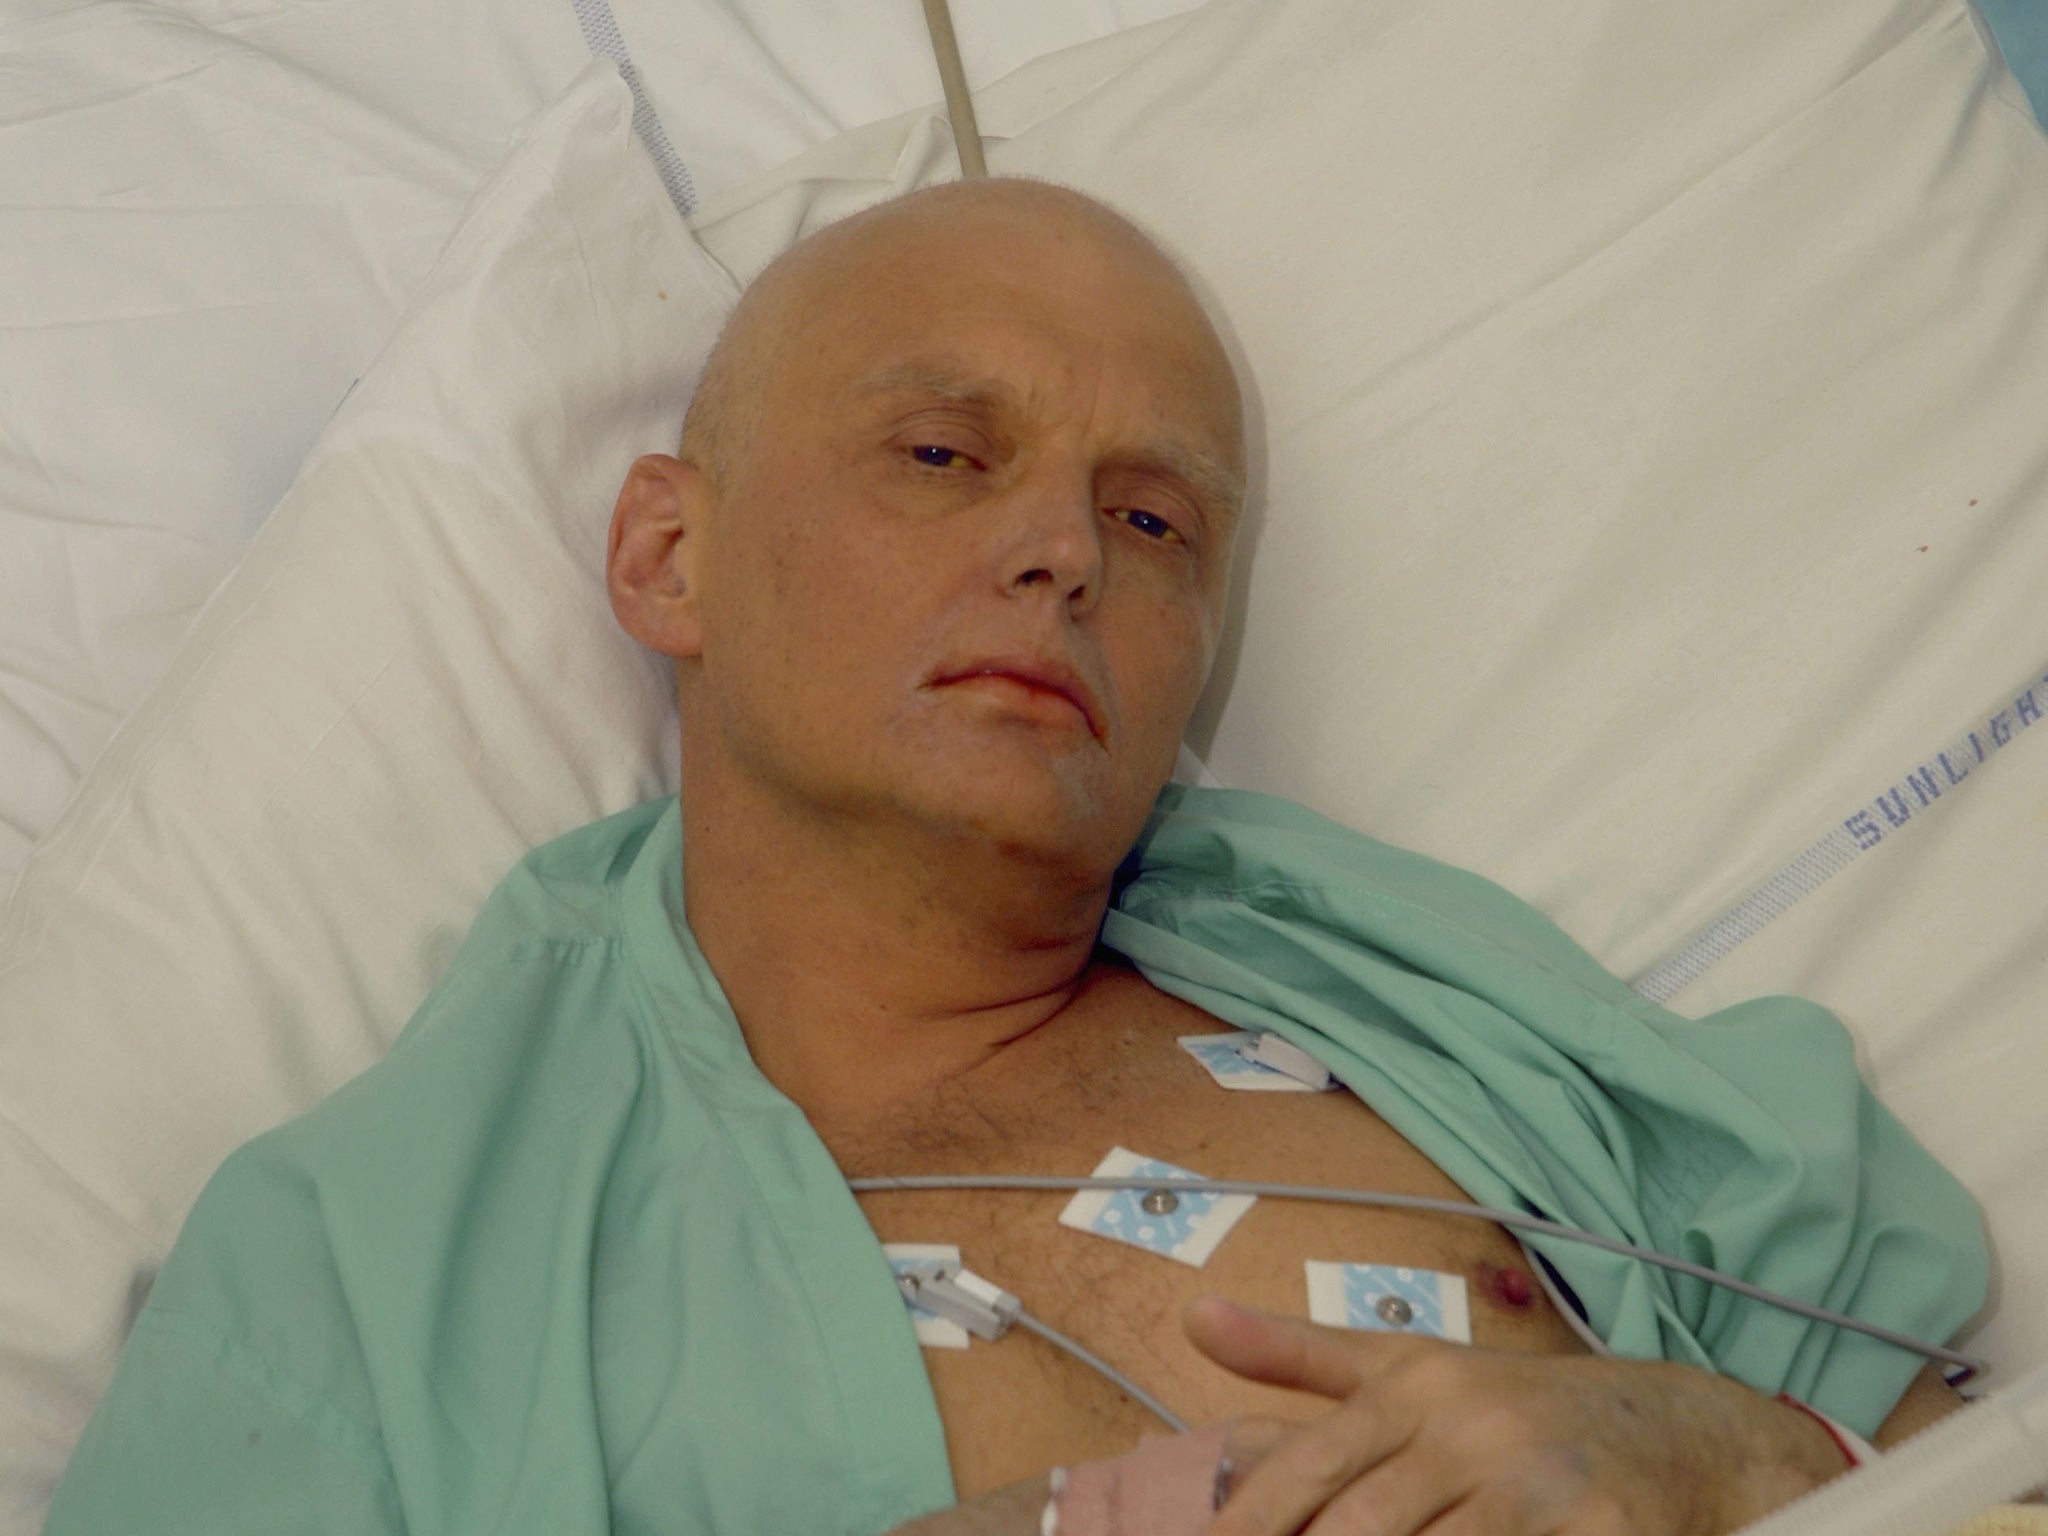 Alexander Litvinenko died in November 2006